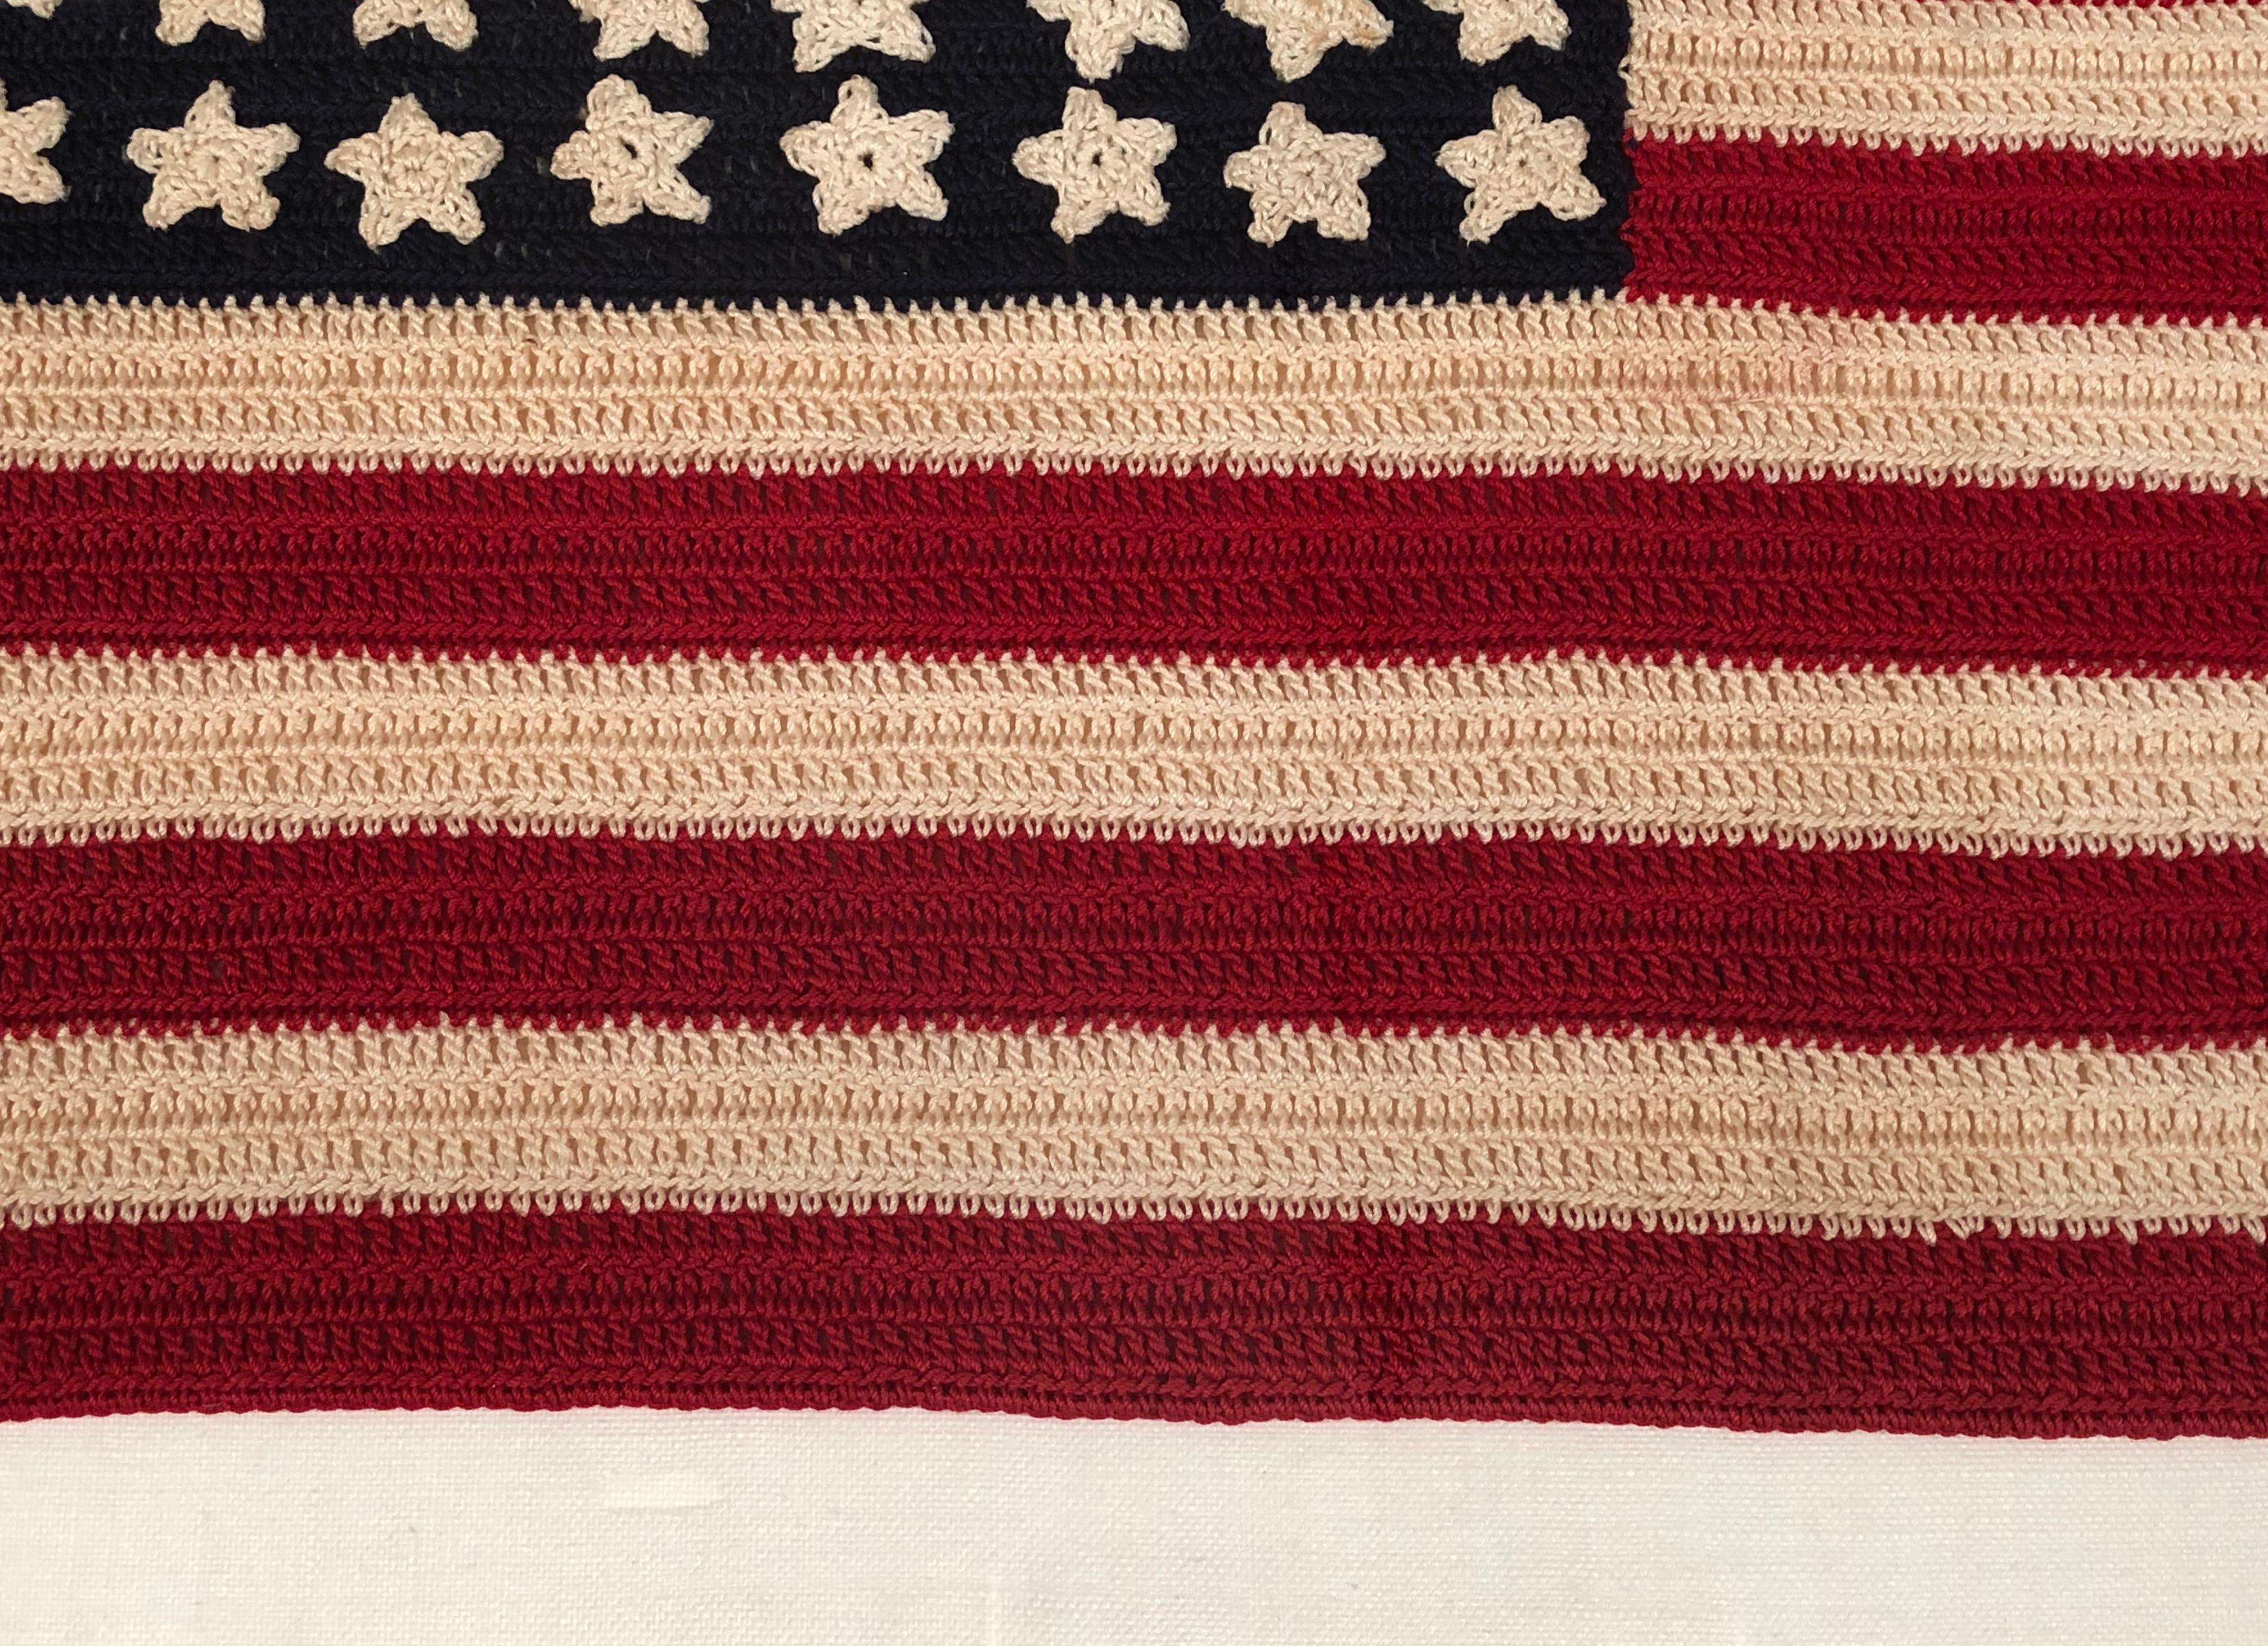 Mid-20th Century Vintage Hand Crocheted American Flag